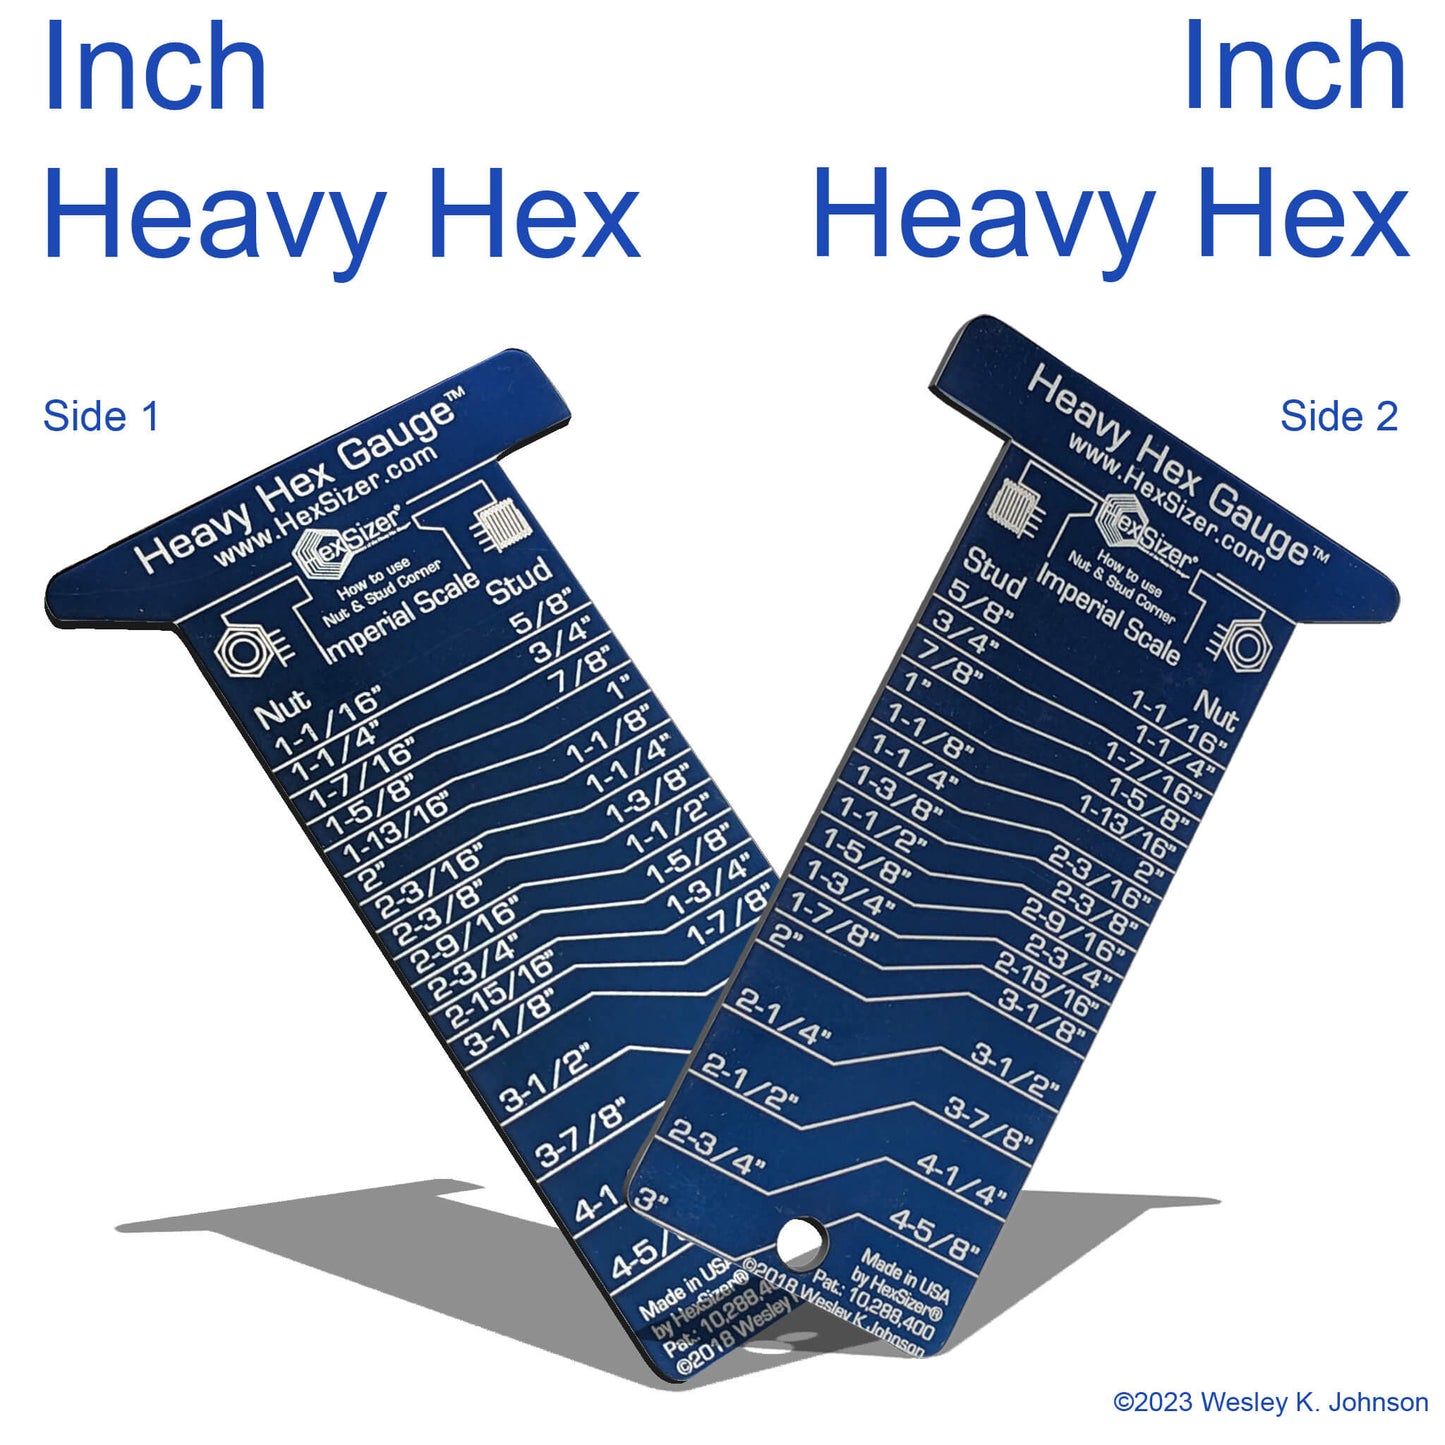 SIDE - 1 Heavy Hex Inch / SIDE 2 - Heavy Hex Inch